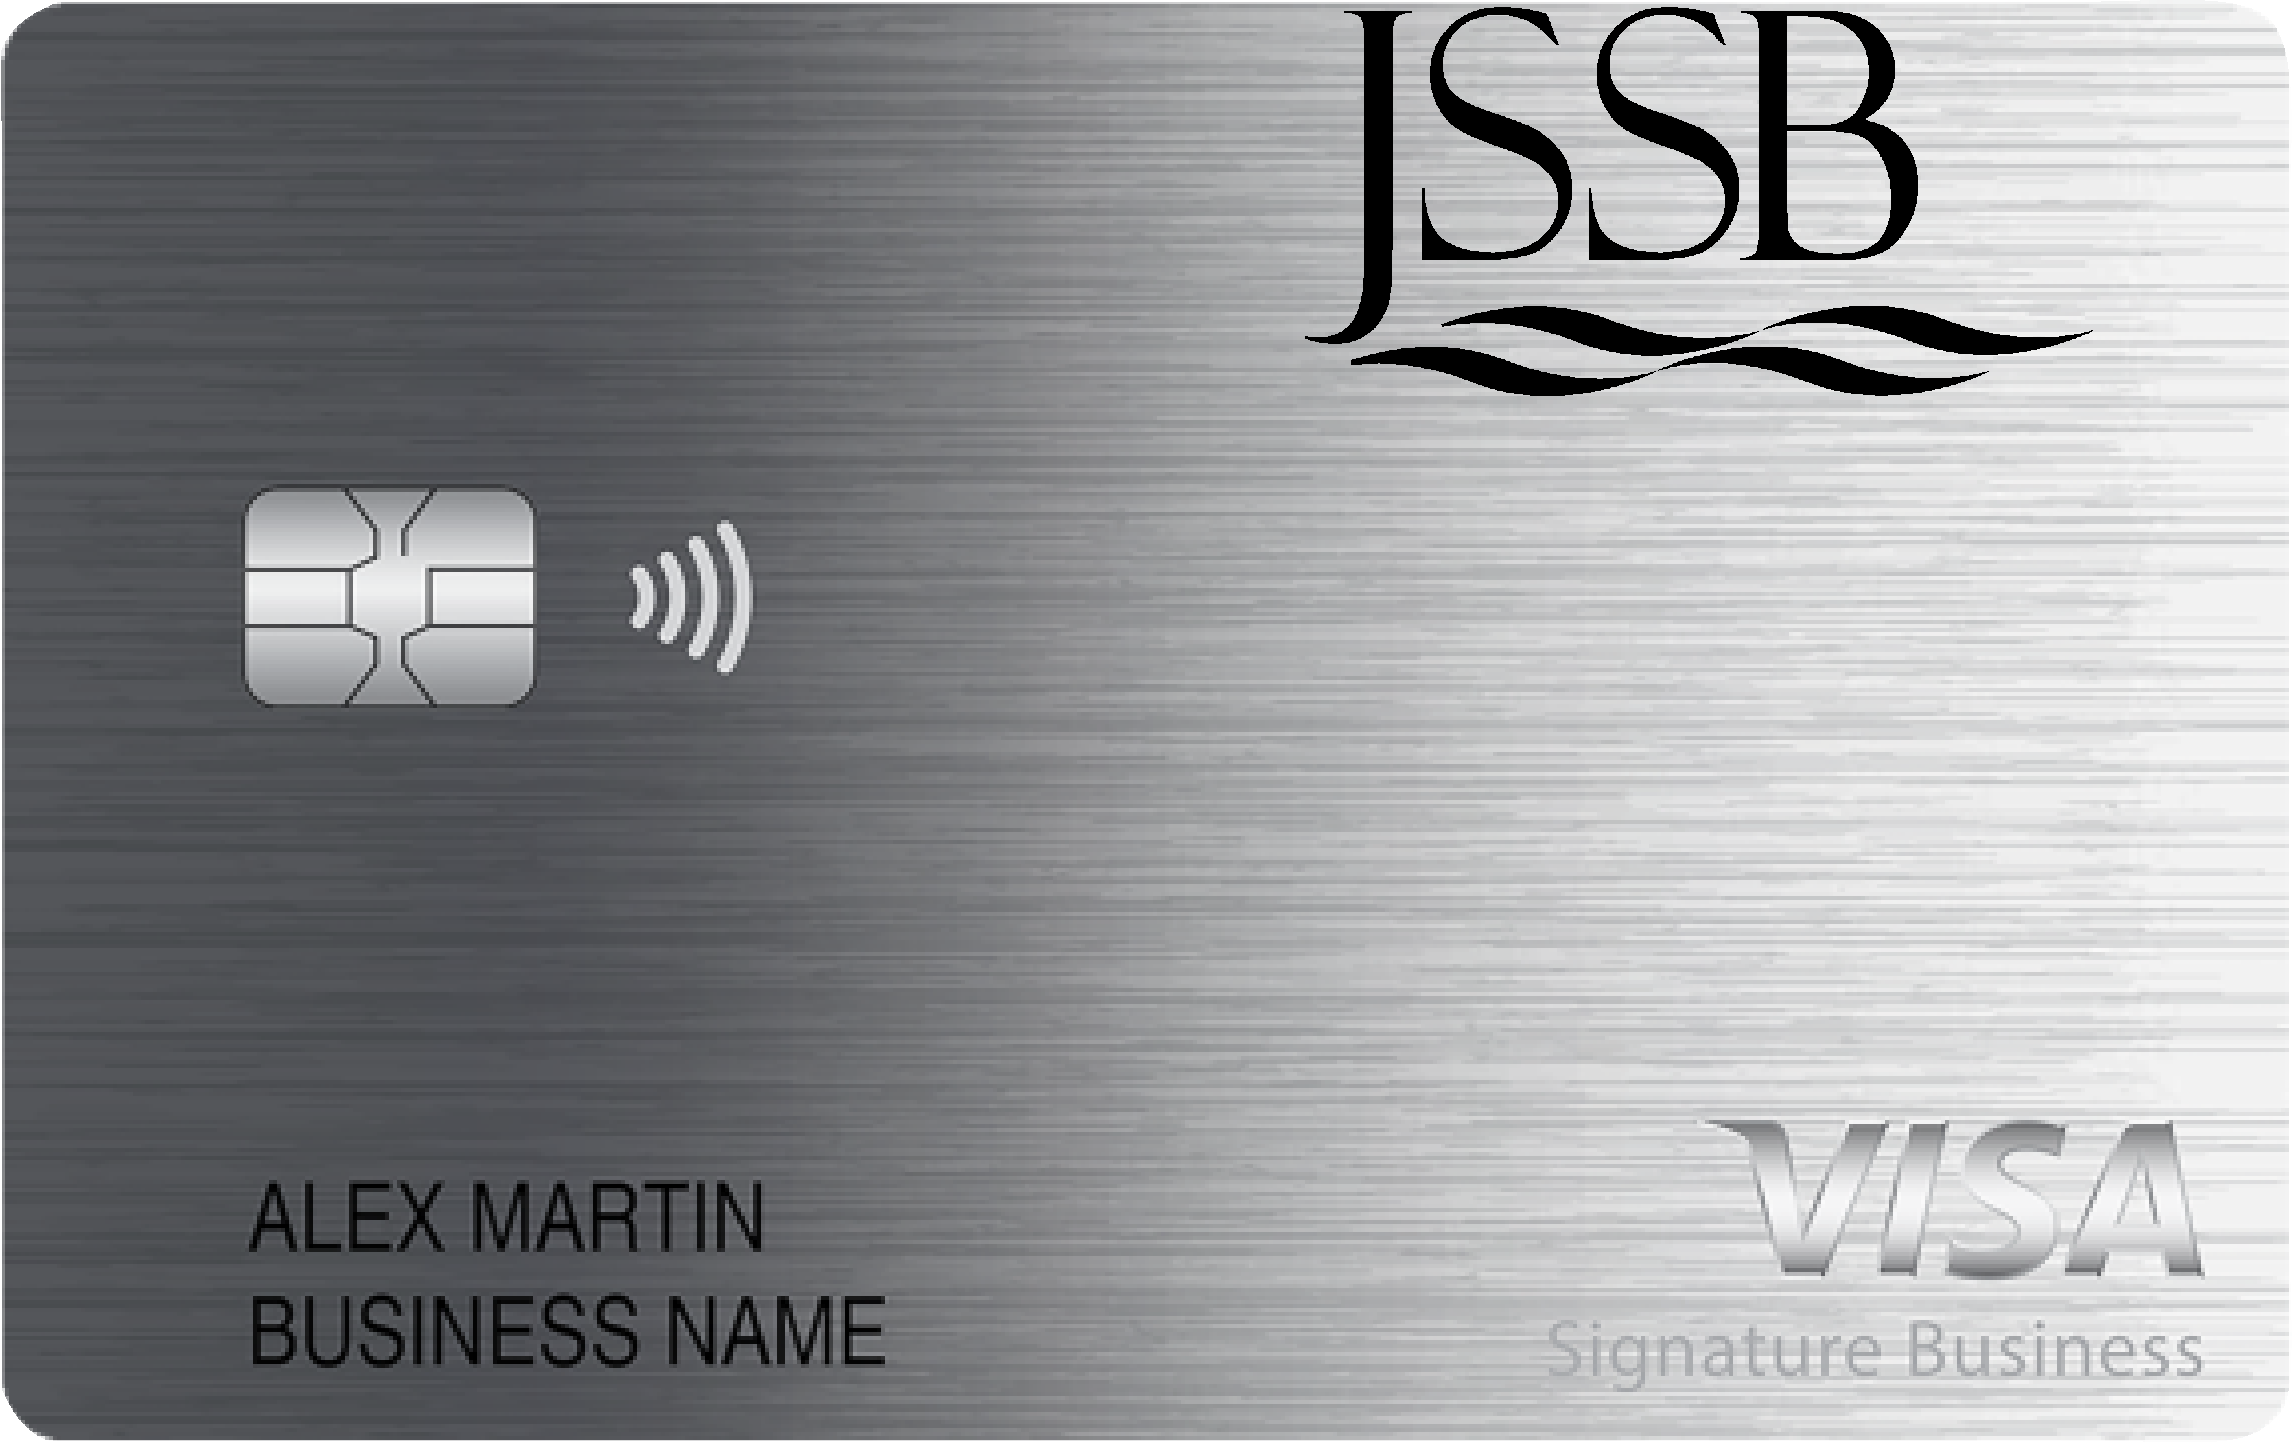 Jersey Shore State Bank Smart Business Rewards Card